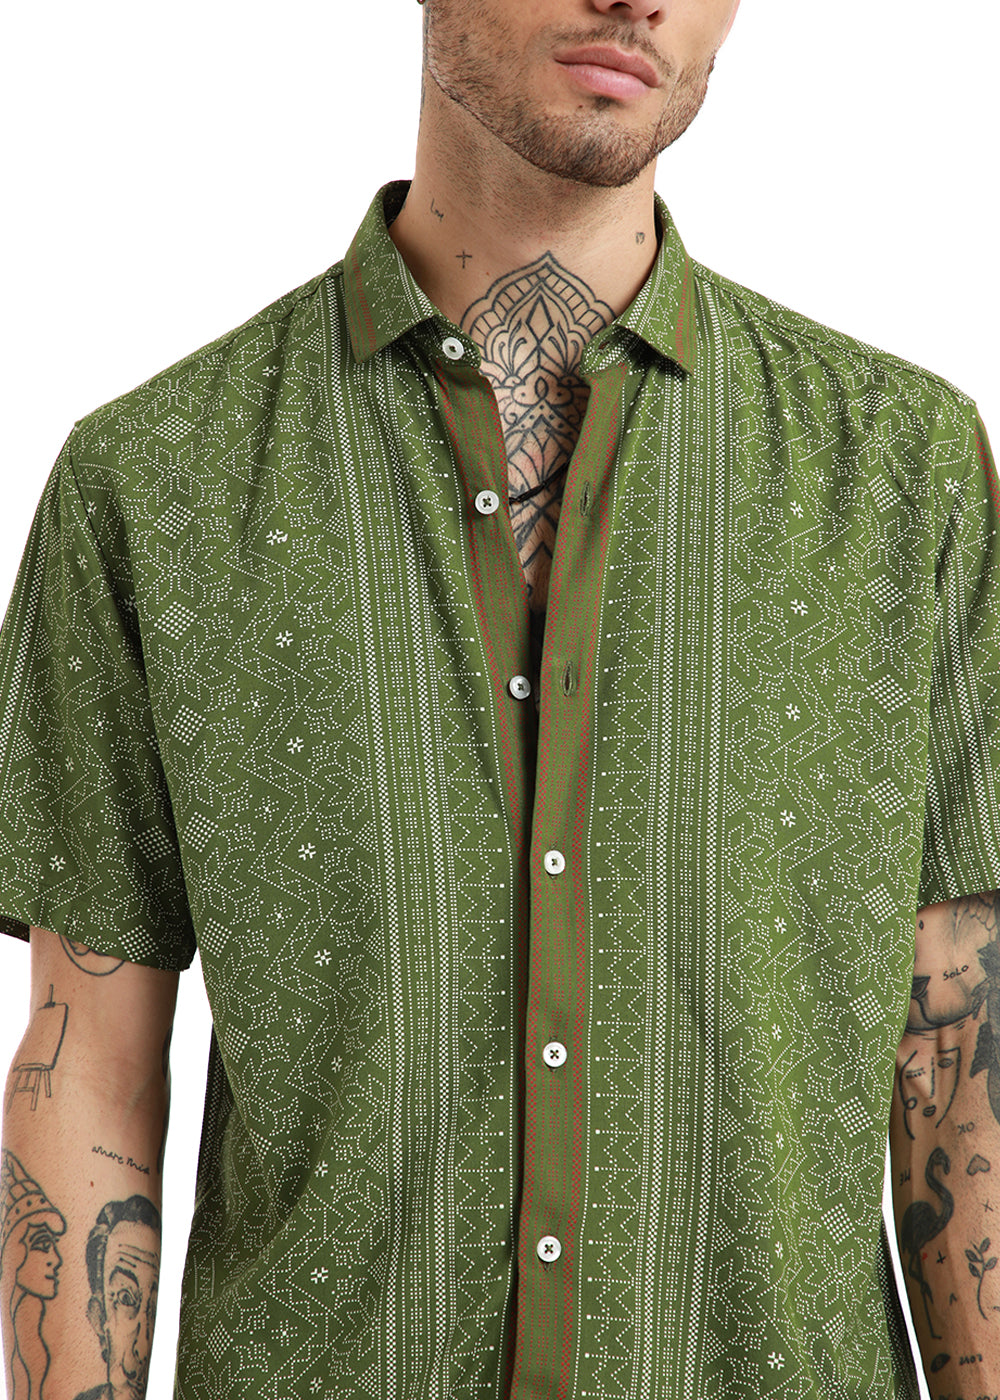 Fabula Olive Green Print Half Sleeve Shirt